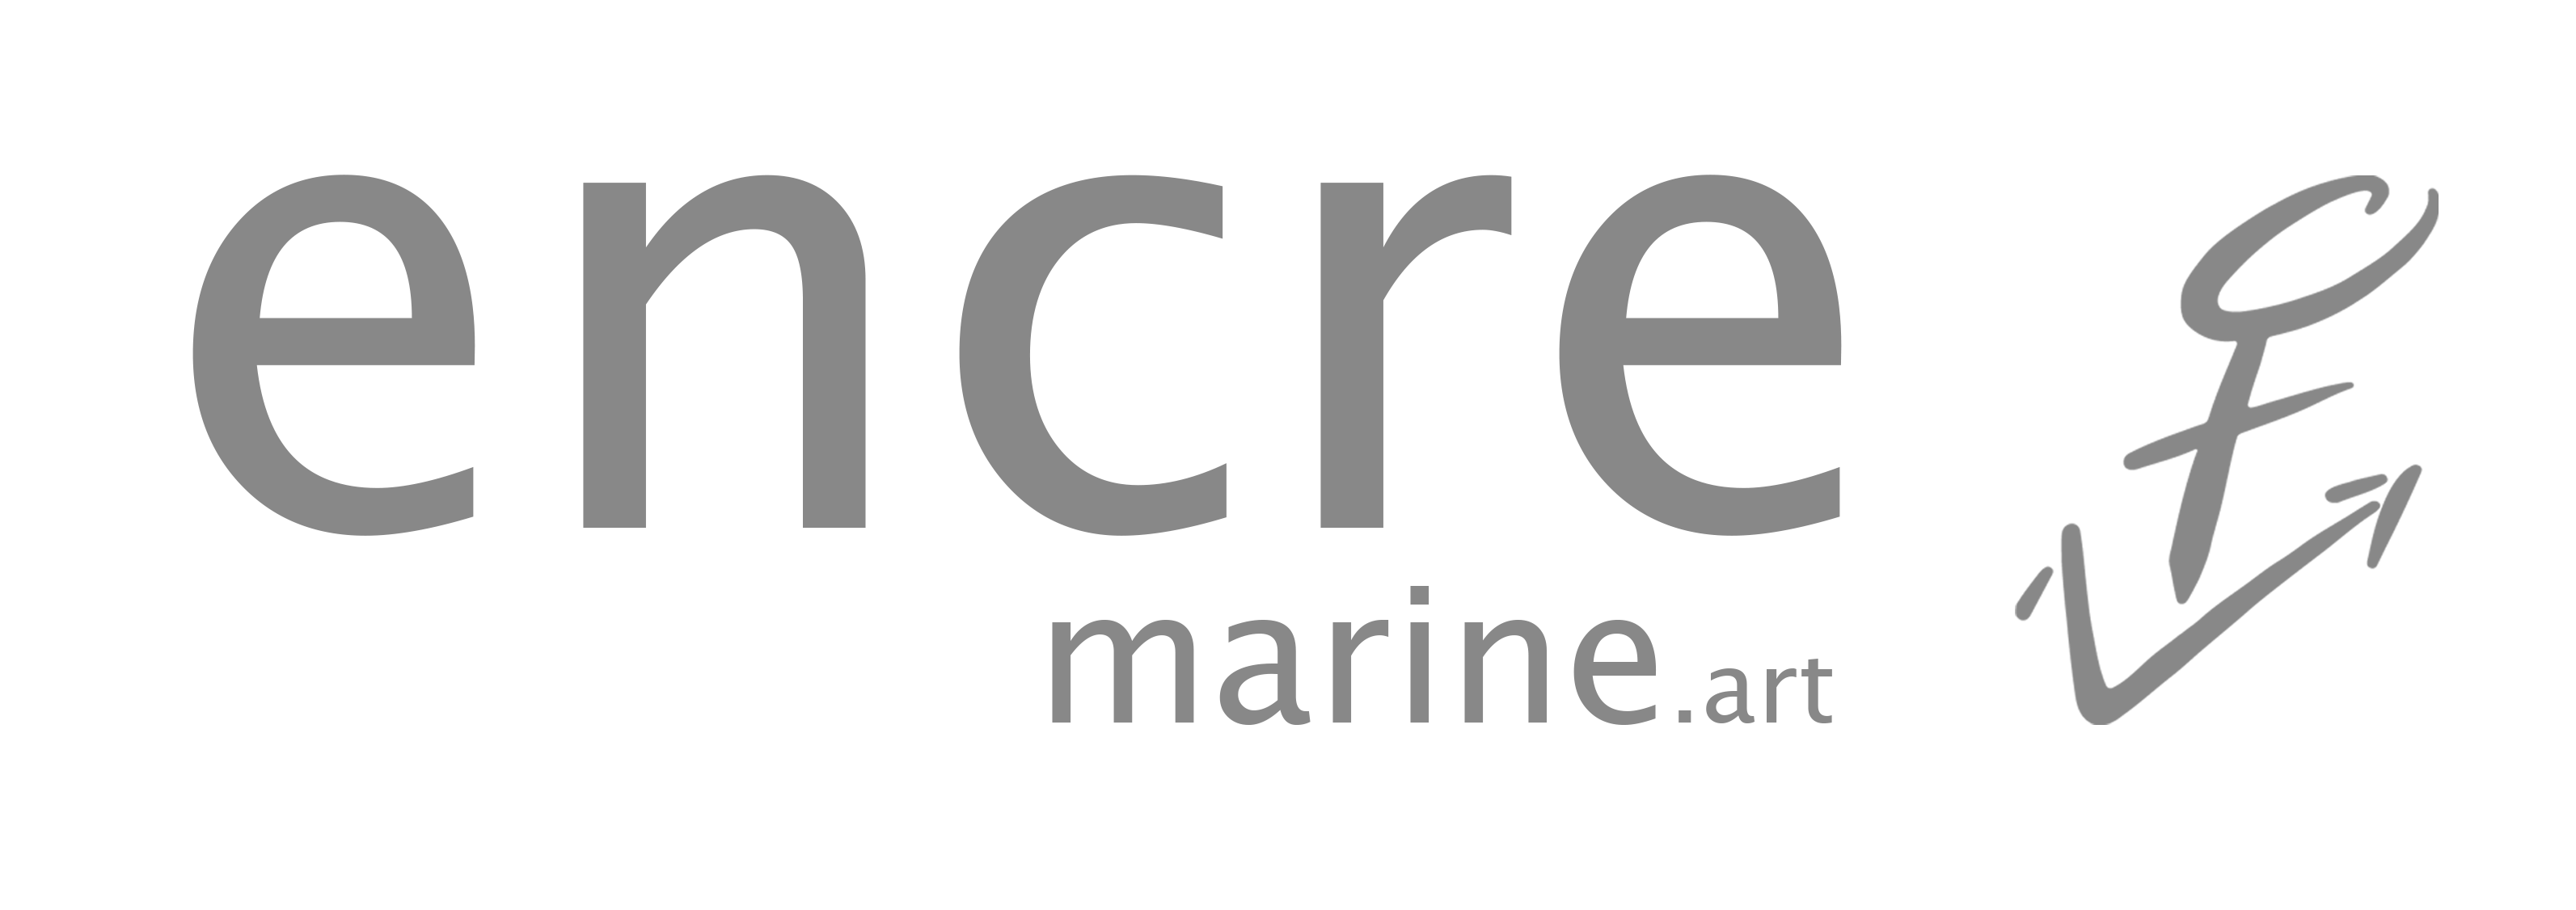 Logo Encre Marine V2 ART